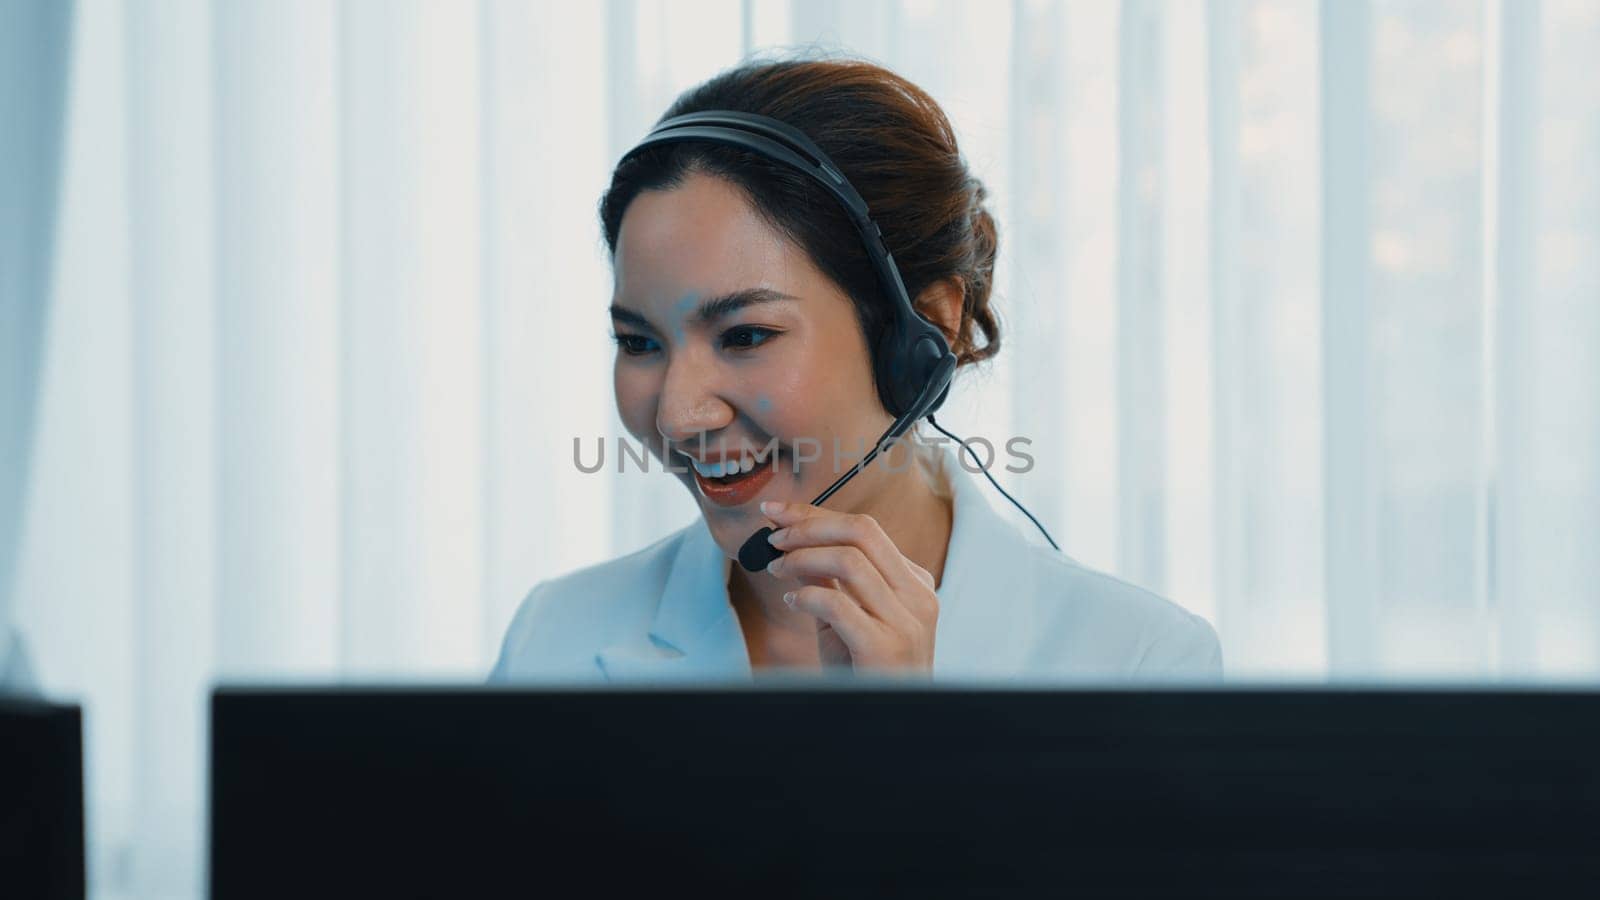 Businesswoman wearing headset working in vivancy office by biancoblue